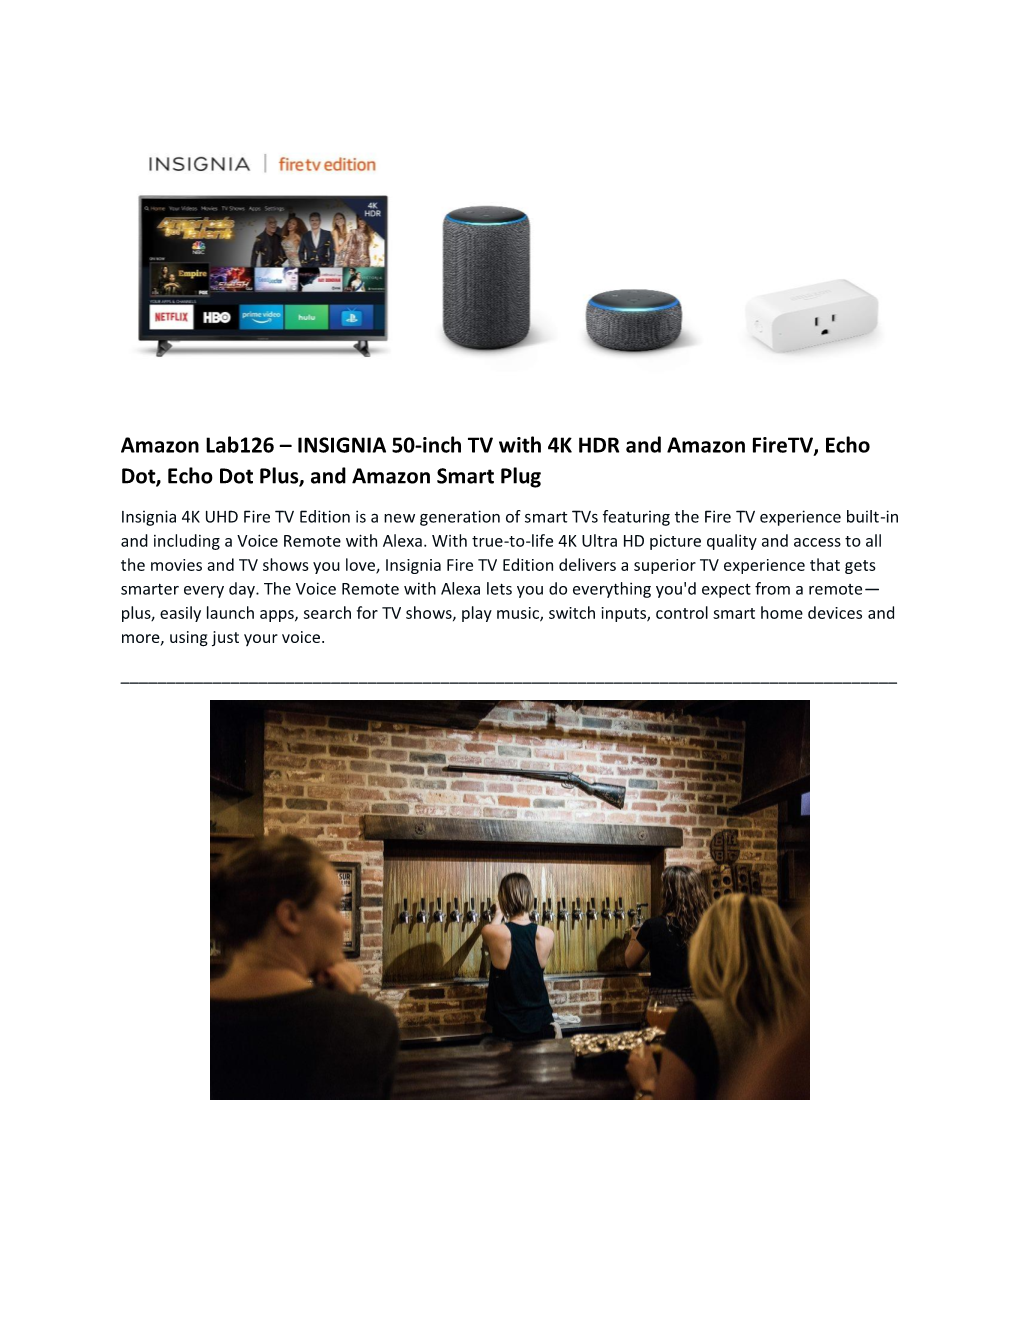 Amazon Lab126 – INSIGNIA 50-Inch TV with 4K HDR and Amazon Firetv, Echo Dot, Echo Dot Plus, and Amazon Smart Plug